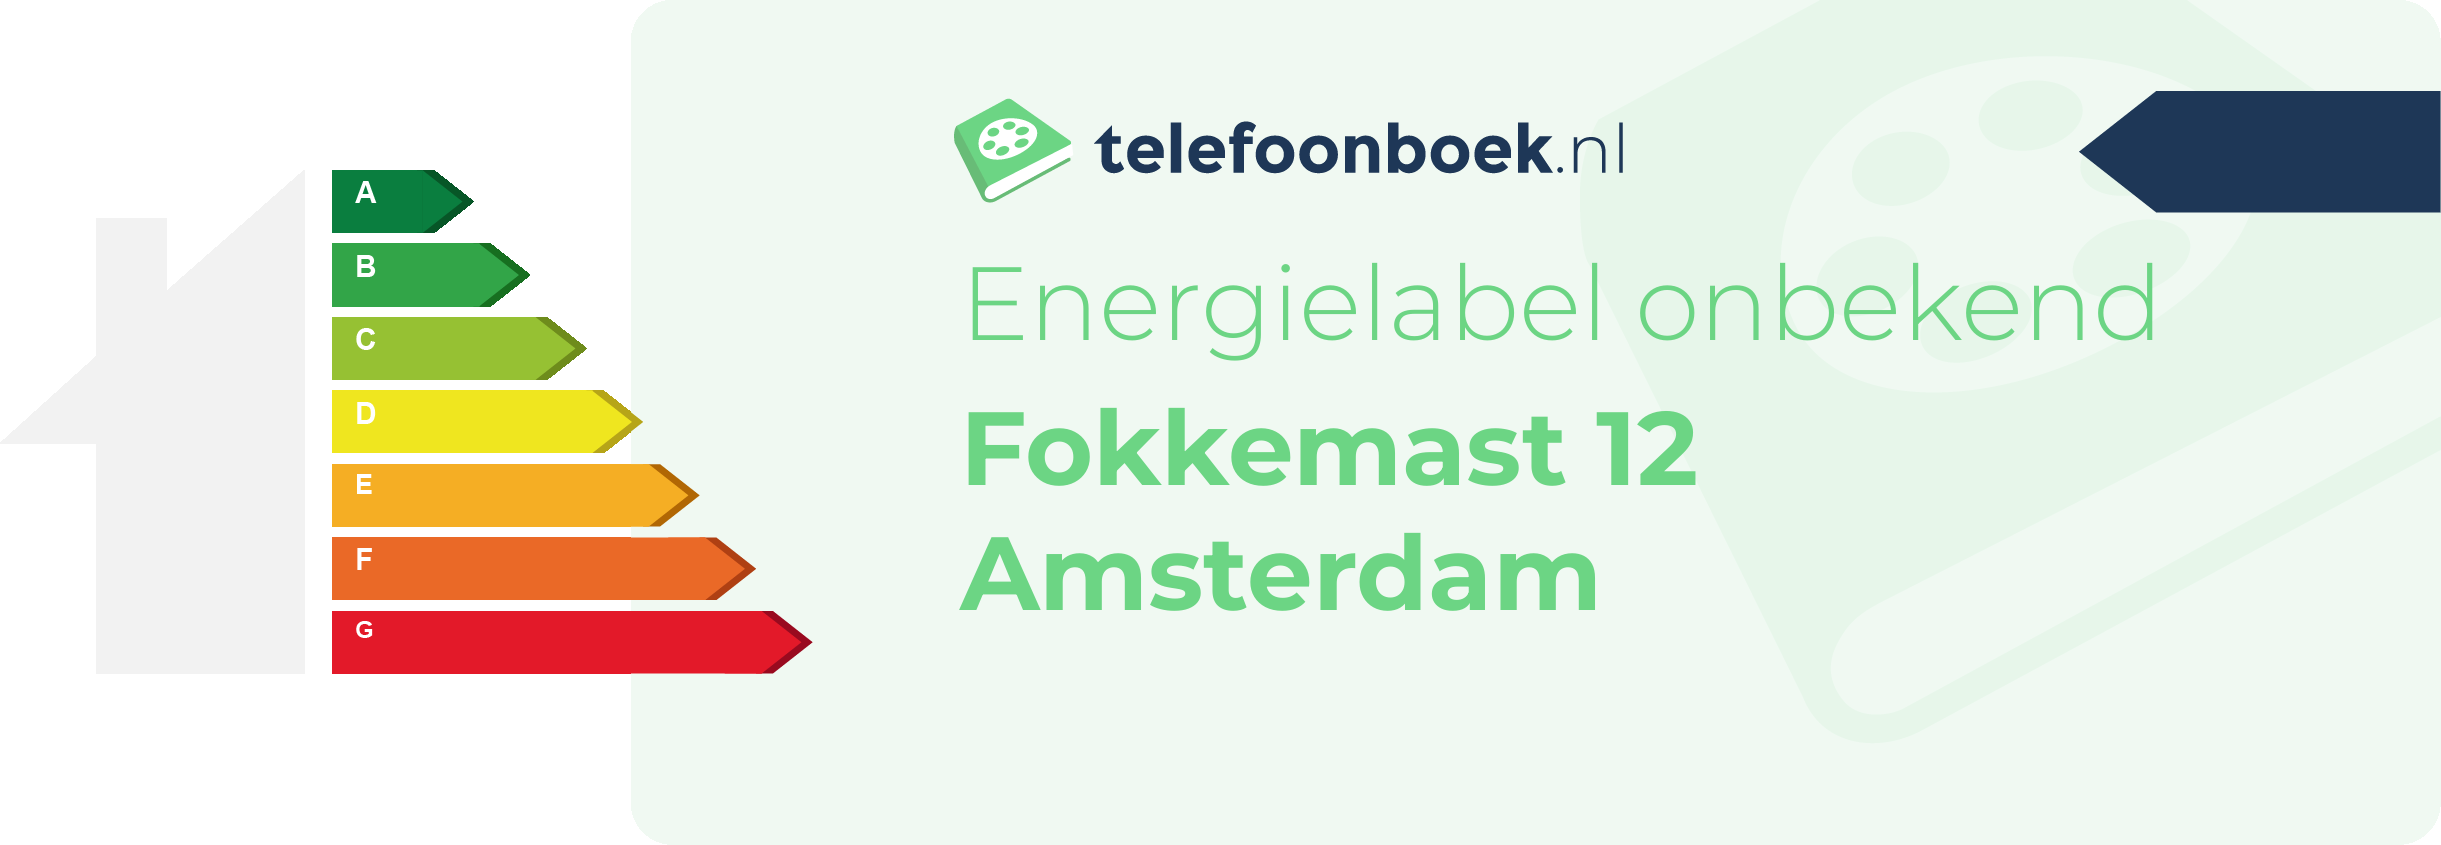 Energielabel Fokkemast 12 Amsterdam